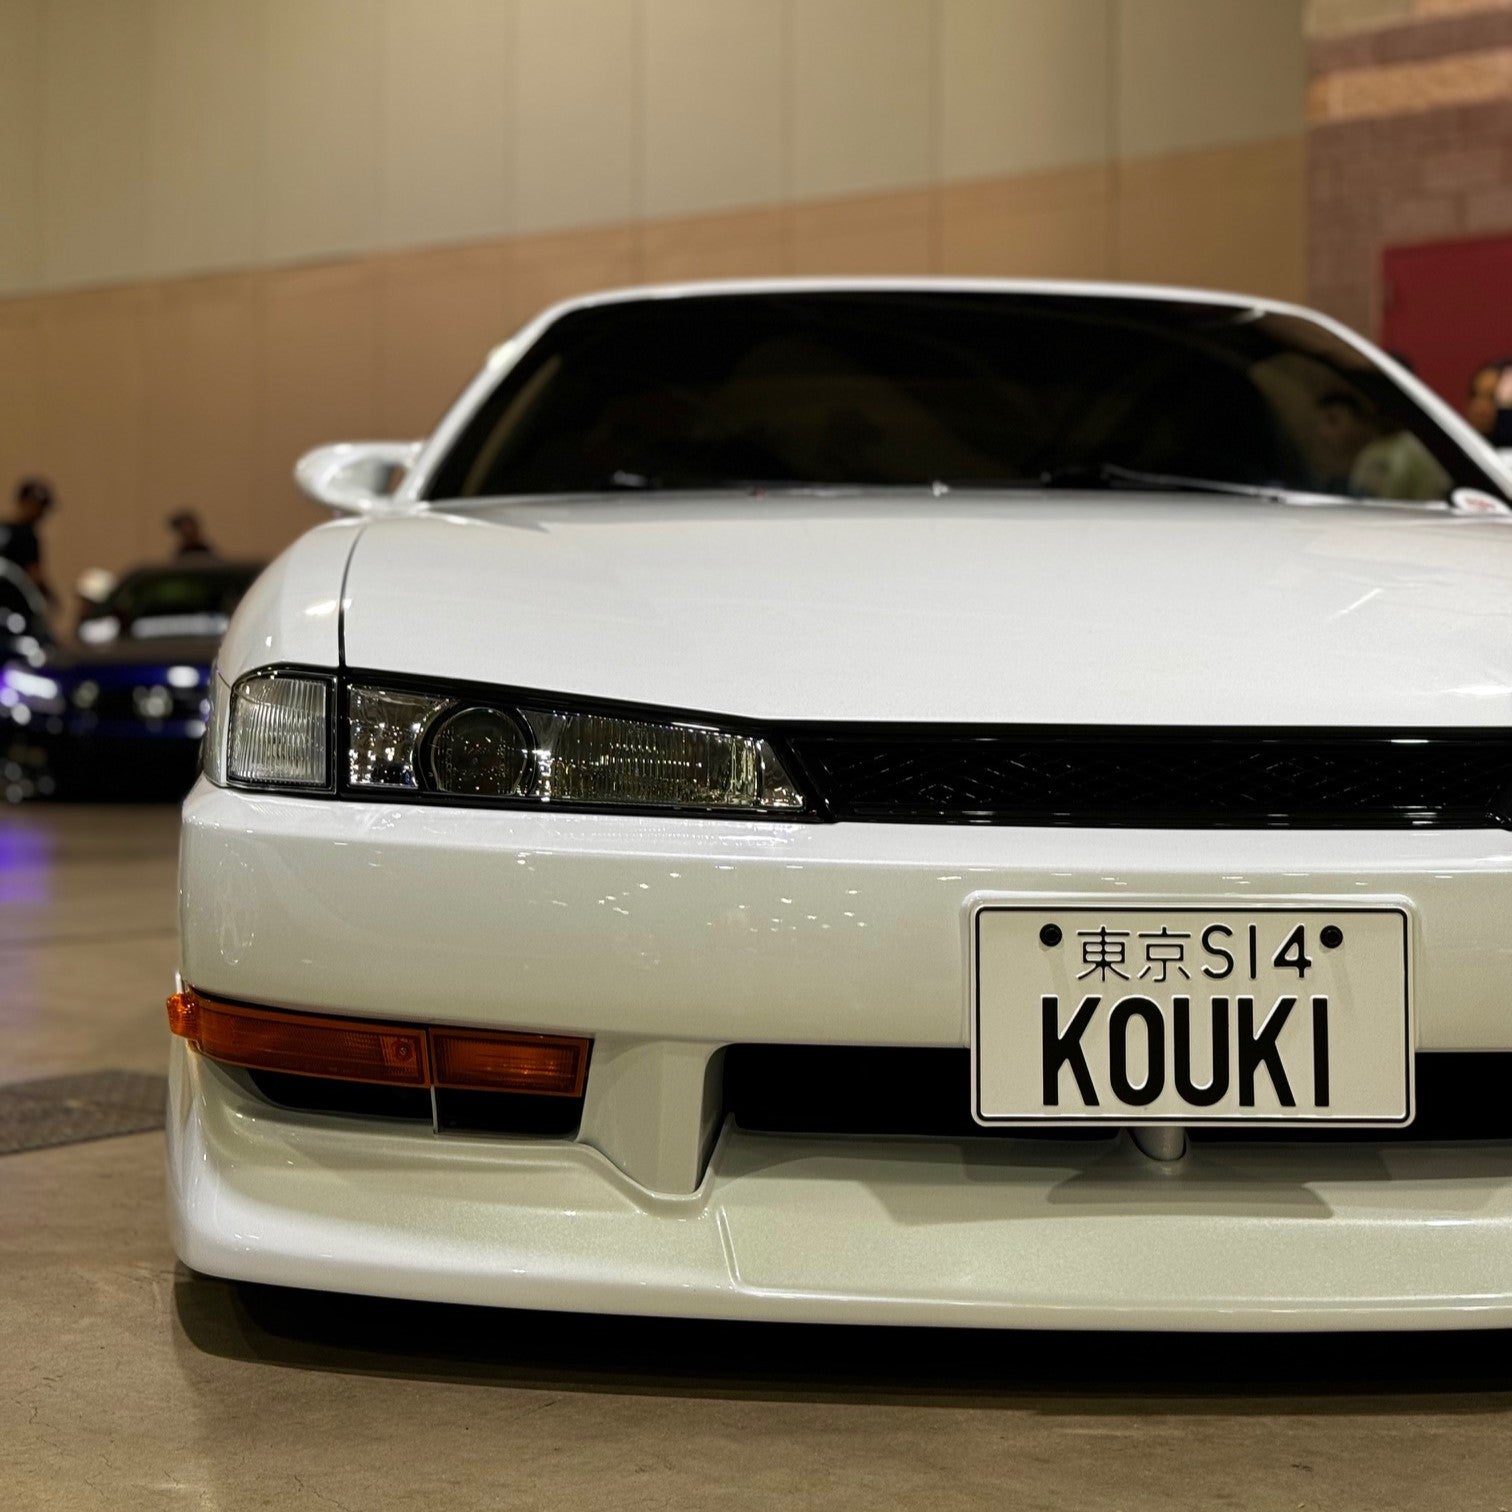 Custom Japanese license plate Kremers front